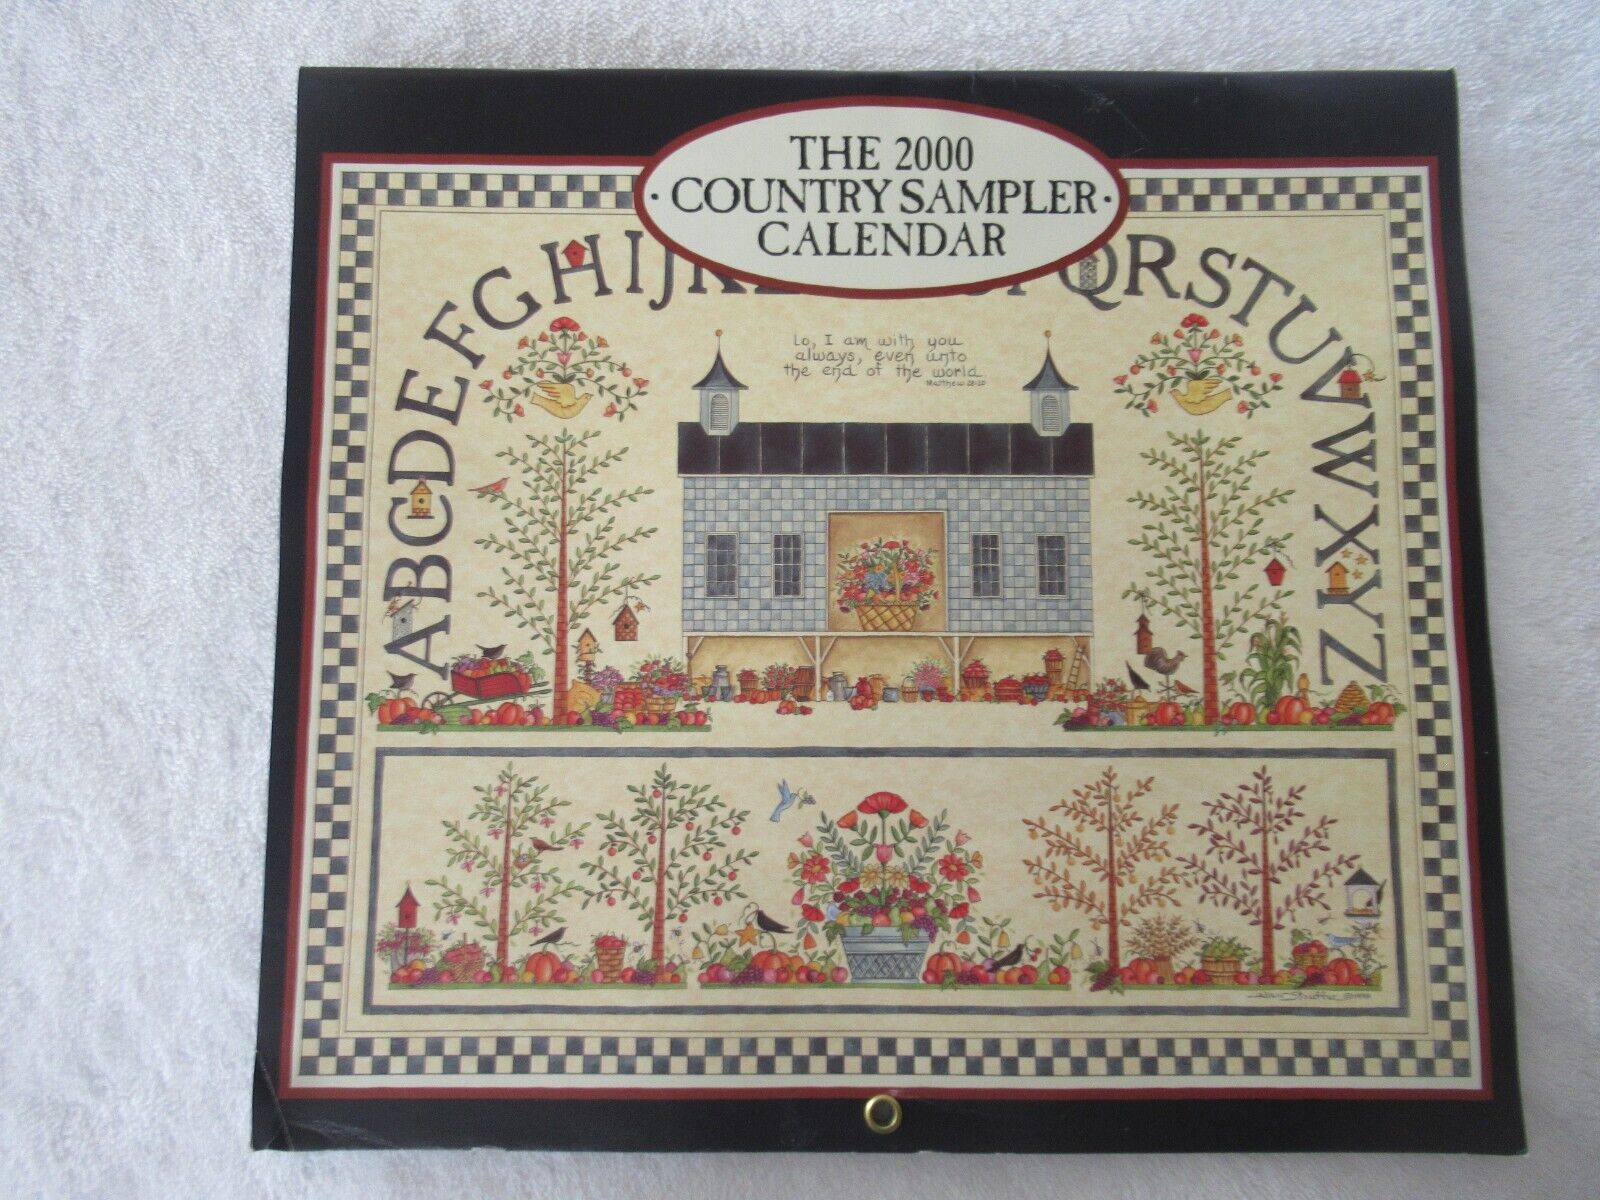 2000 LANG Country Sampler Calendar With Ellen Stouffer Artwork - Large